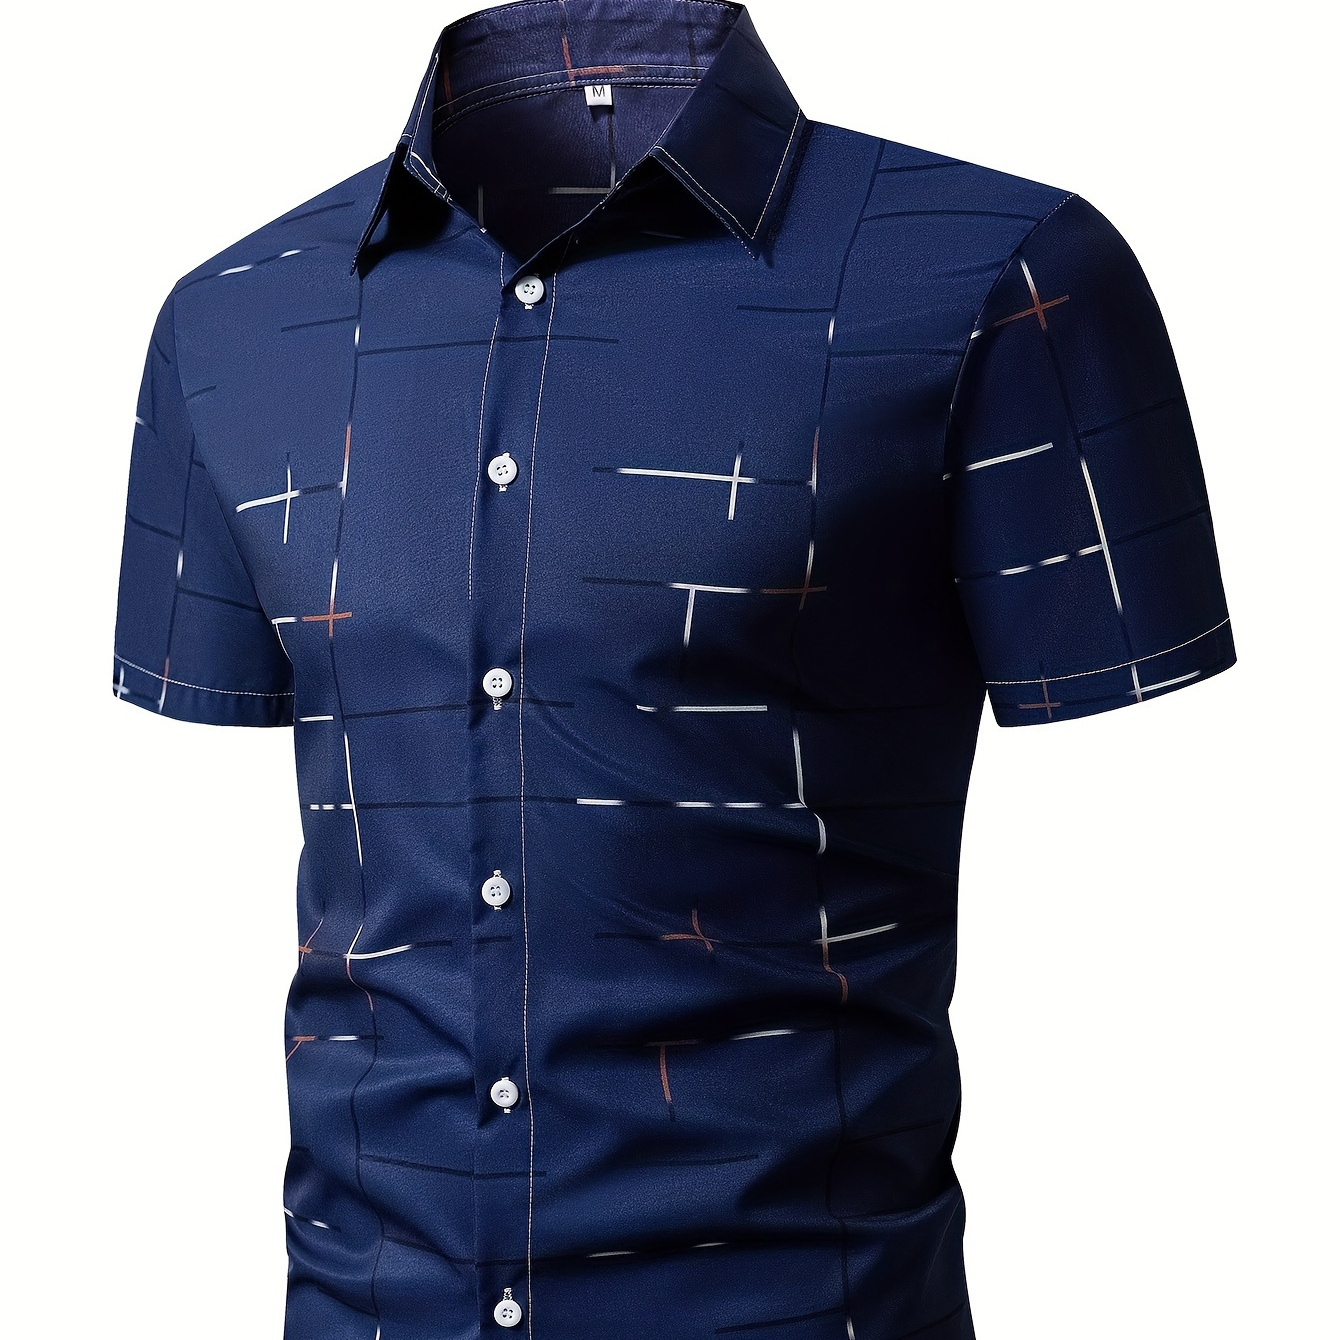 

Men's Casual Plaid Button Up Short Sleeve Shirt, Men's Shirt For Summer Vacation Resort, Tops For Men